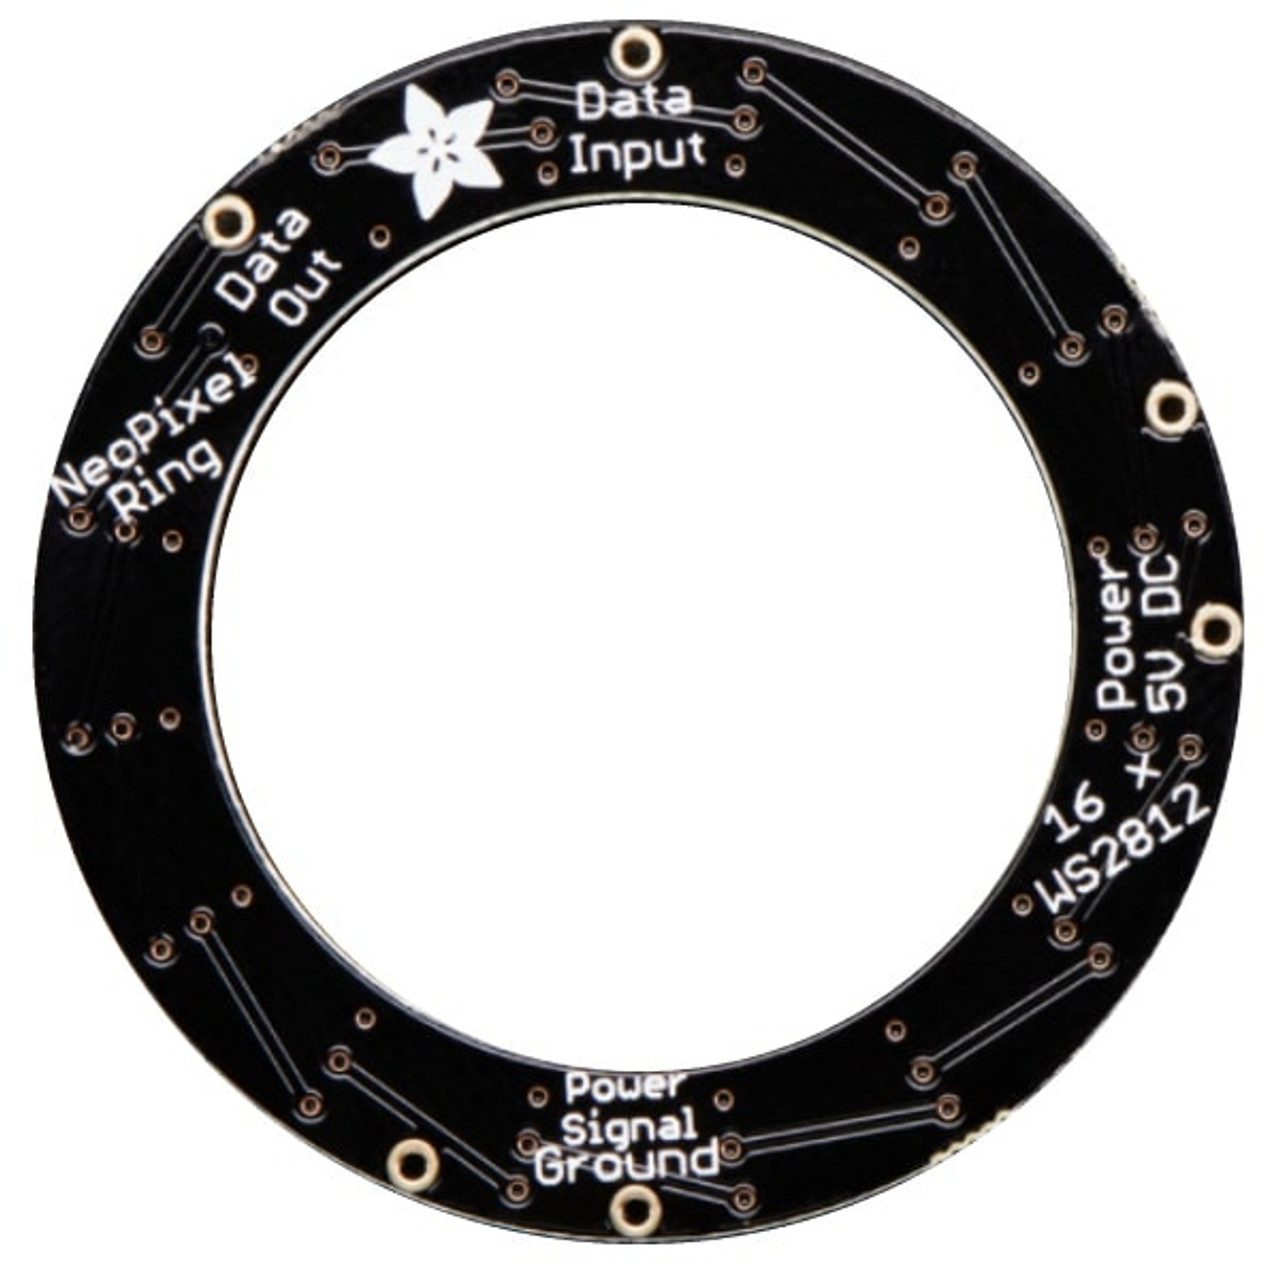 WCMCU Neopixel 16 bits LED Ring with an Arduino nano board - YouTube